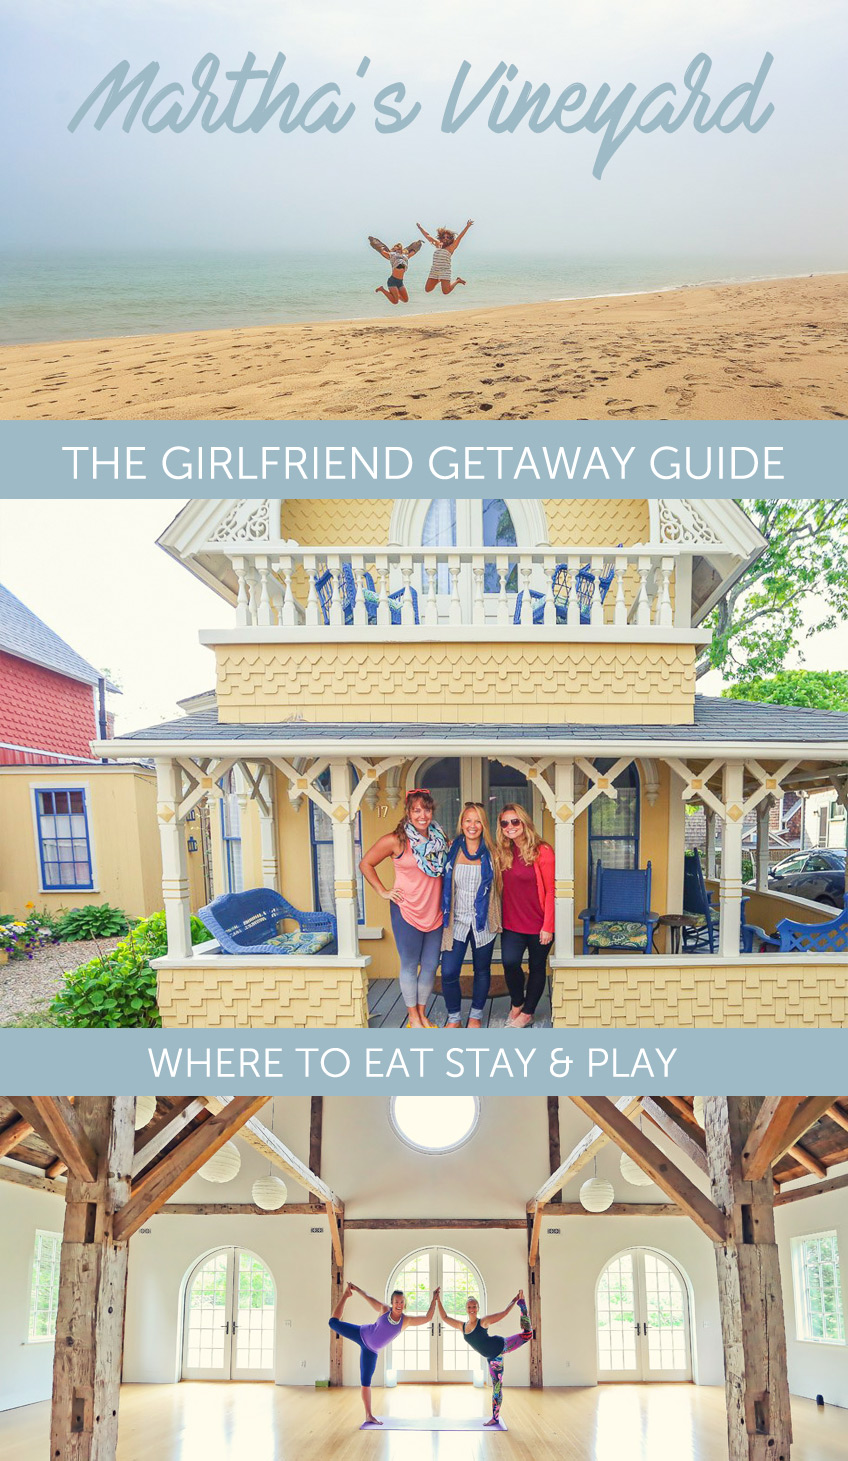 The Martha's Vineyard Girlfriend Getaway Guide